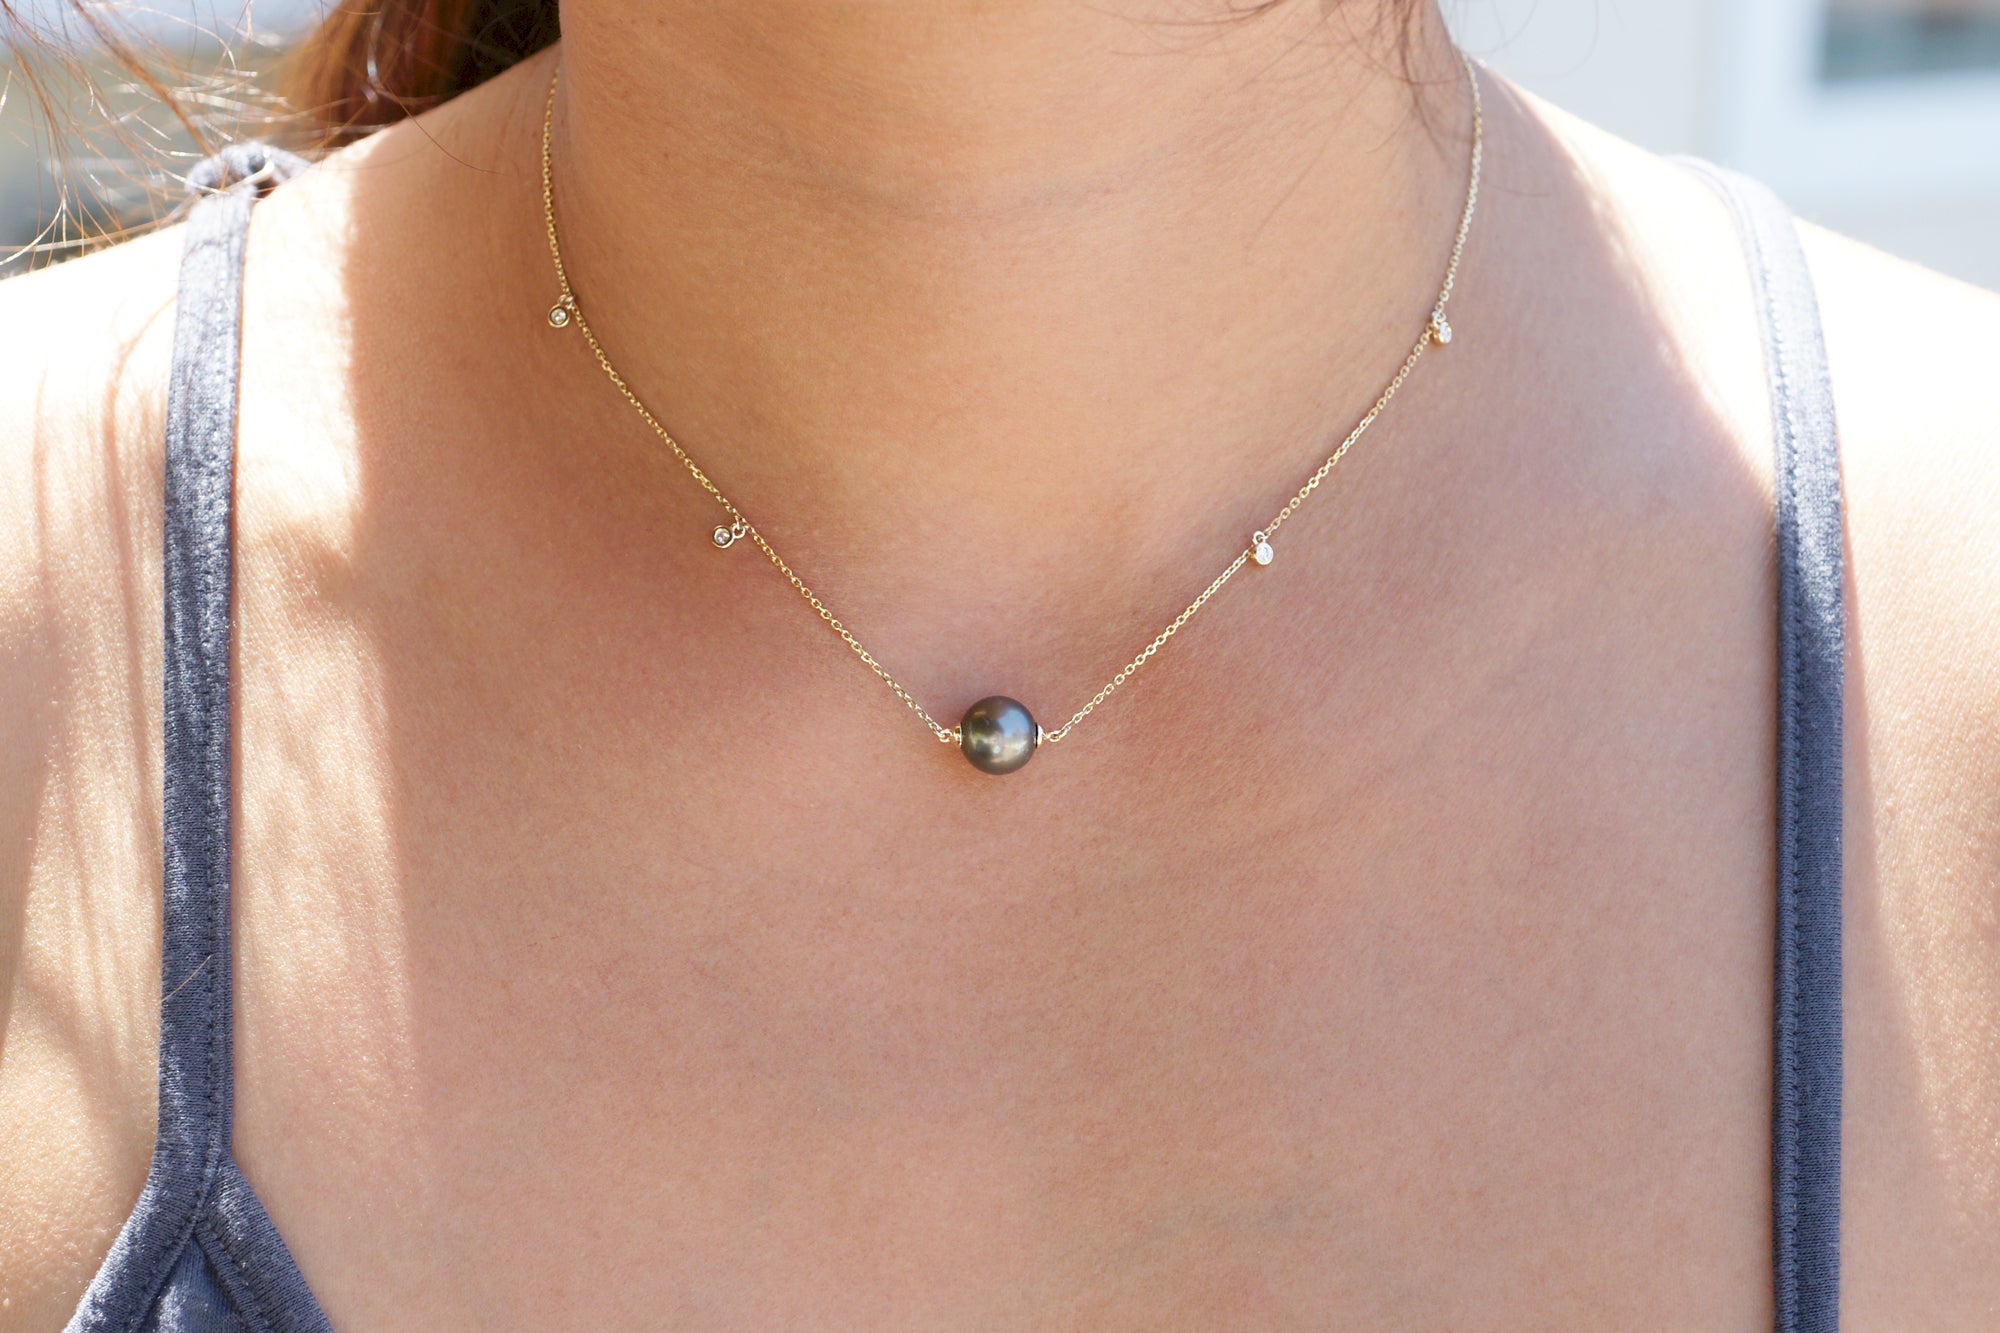 The Pualani Pearl Diamond Necklace